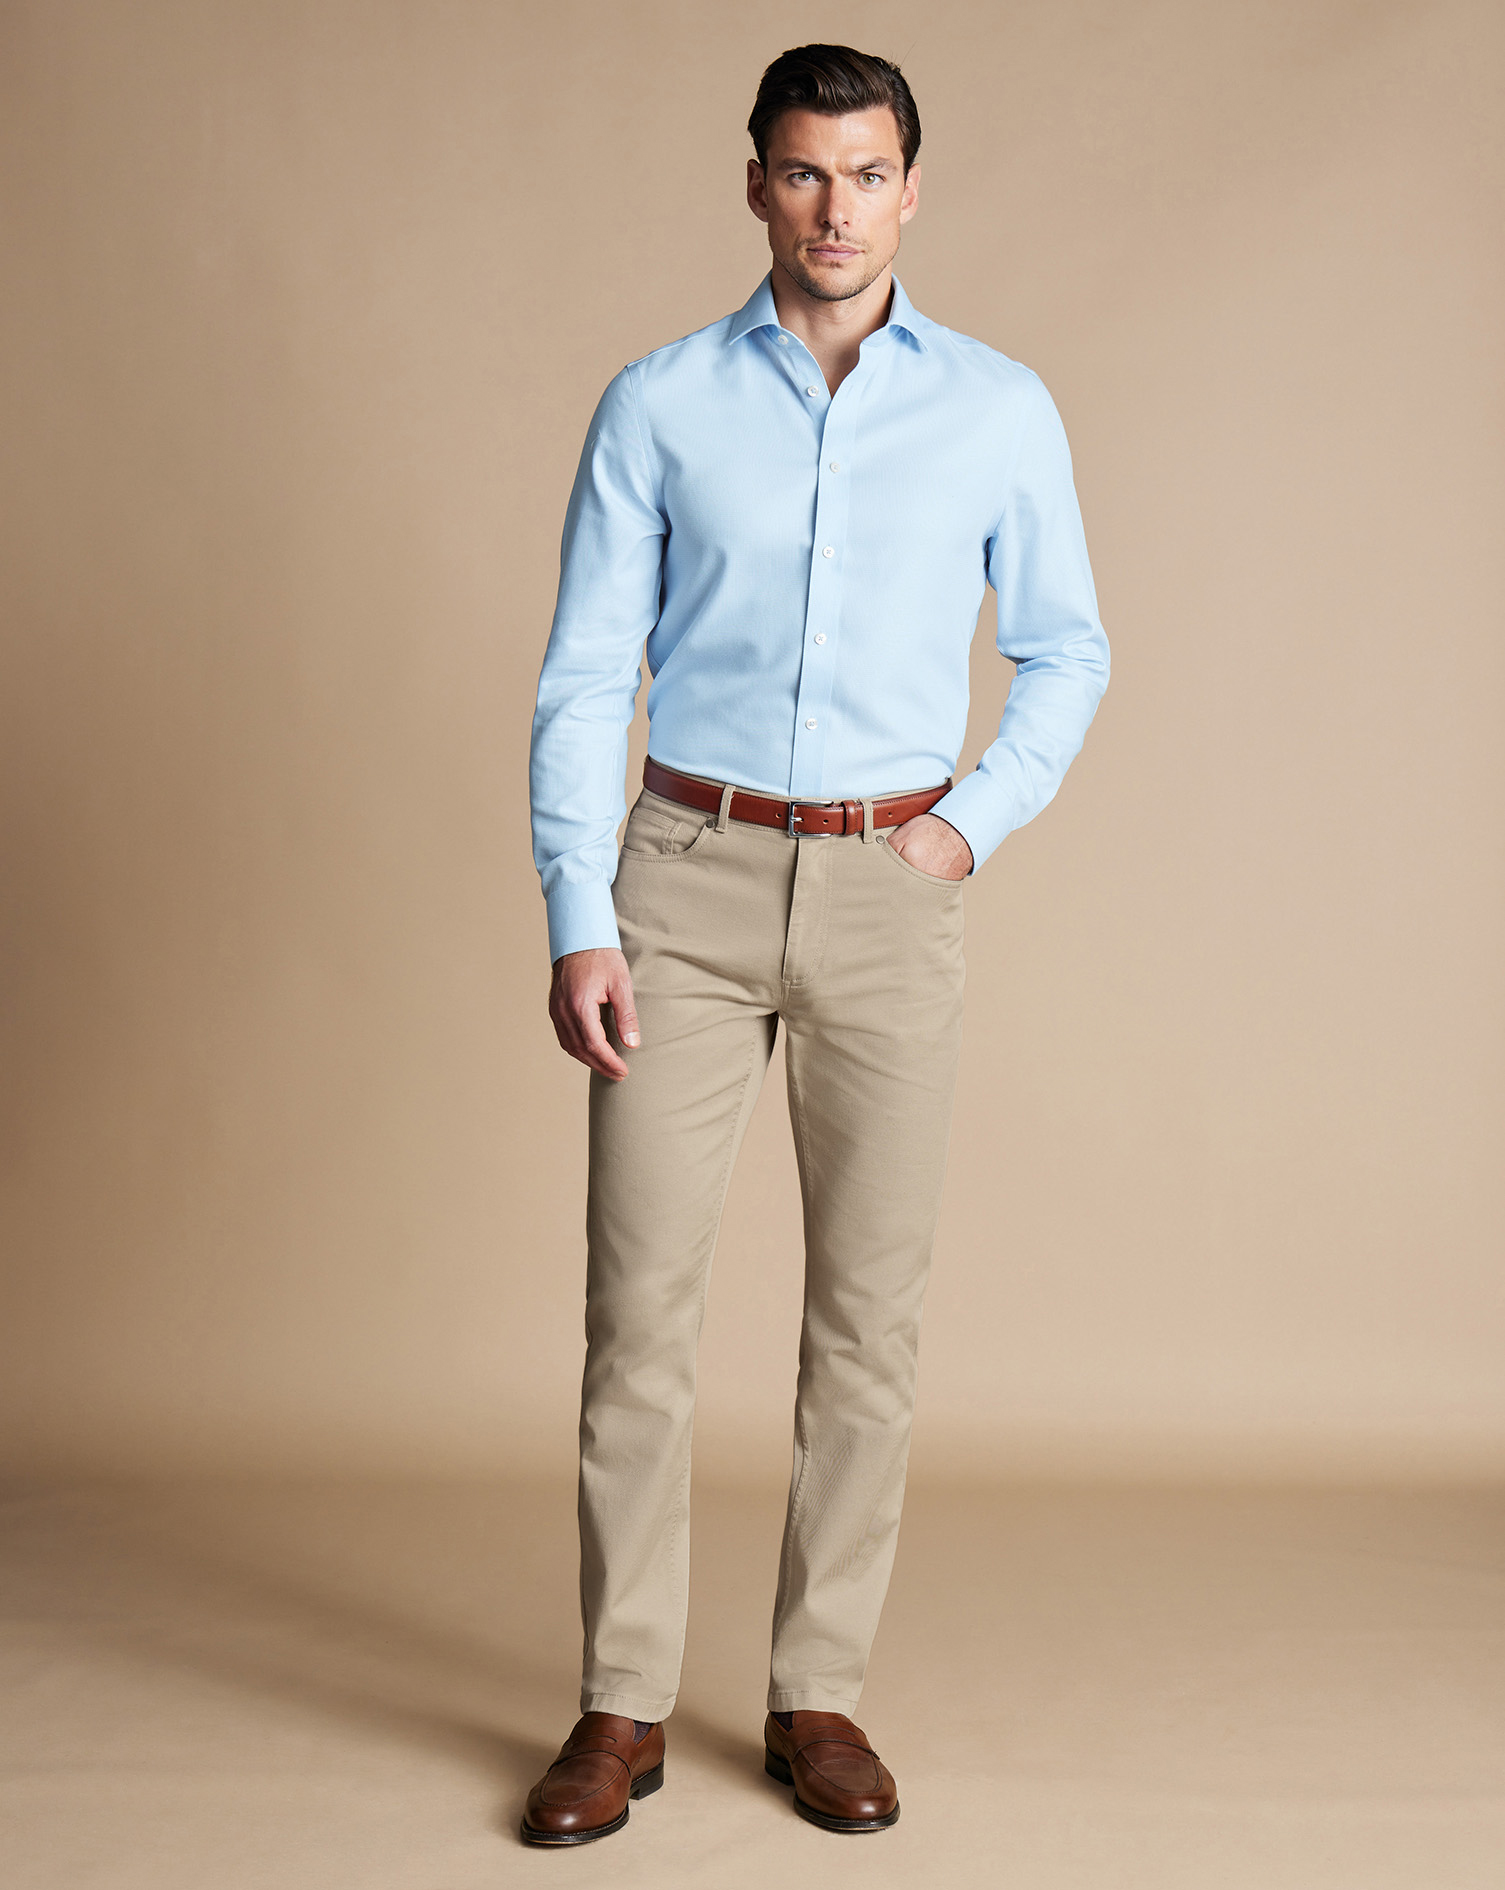 Men's Charles Tyrwhitt Twill 5 Pocket Jeans - Stone Neutral Size W36 L34 Cotton
